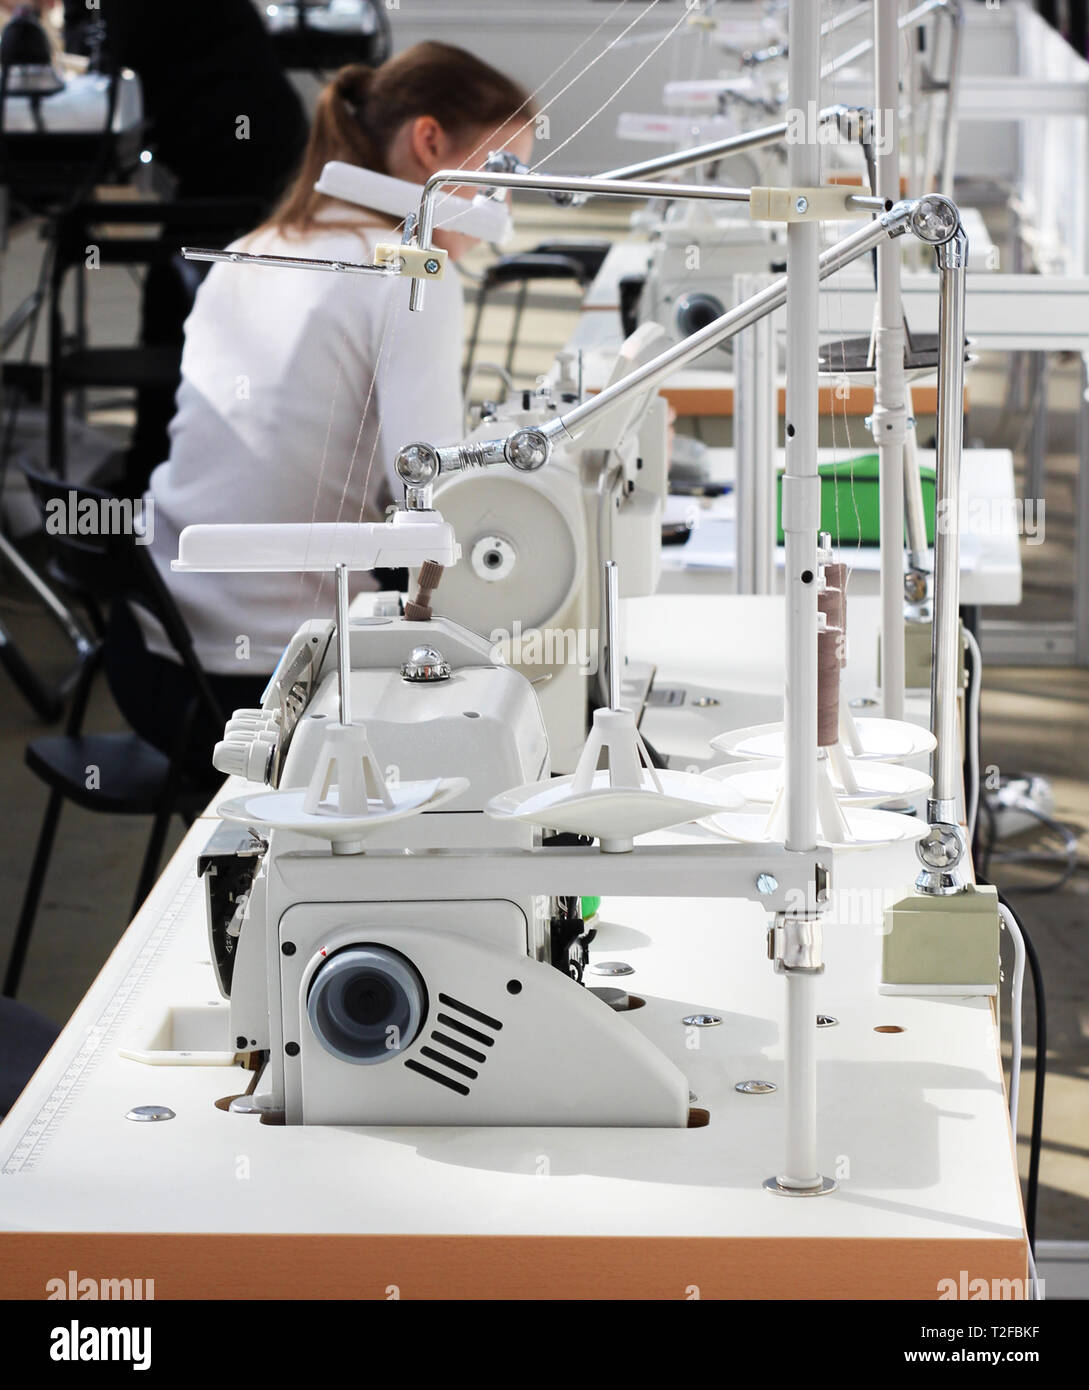 La fabbrica circa cucire vestiti. Persone e macchine da cucire in una fabbrica di indumento. Industria tessile. Fabbrica di cucitura. Foto Stock